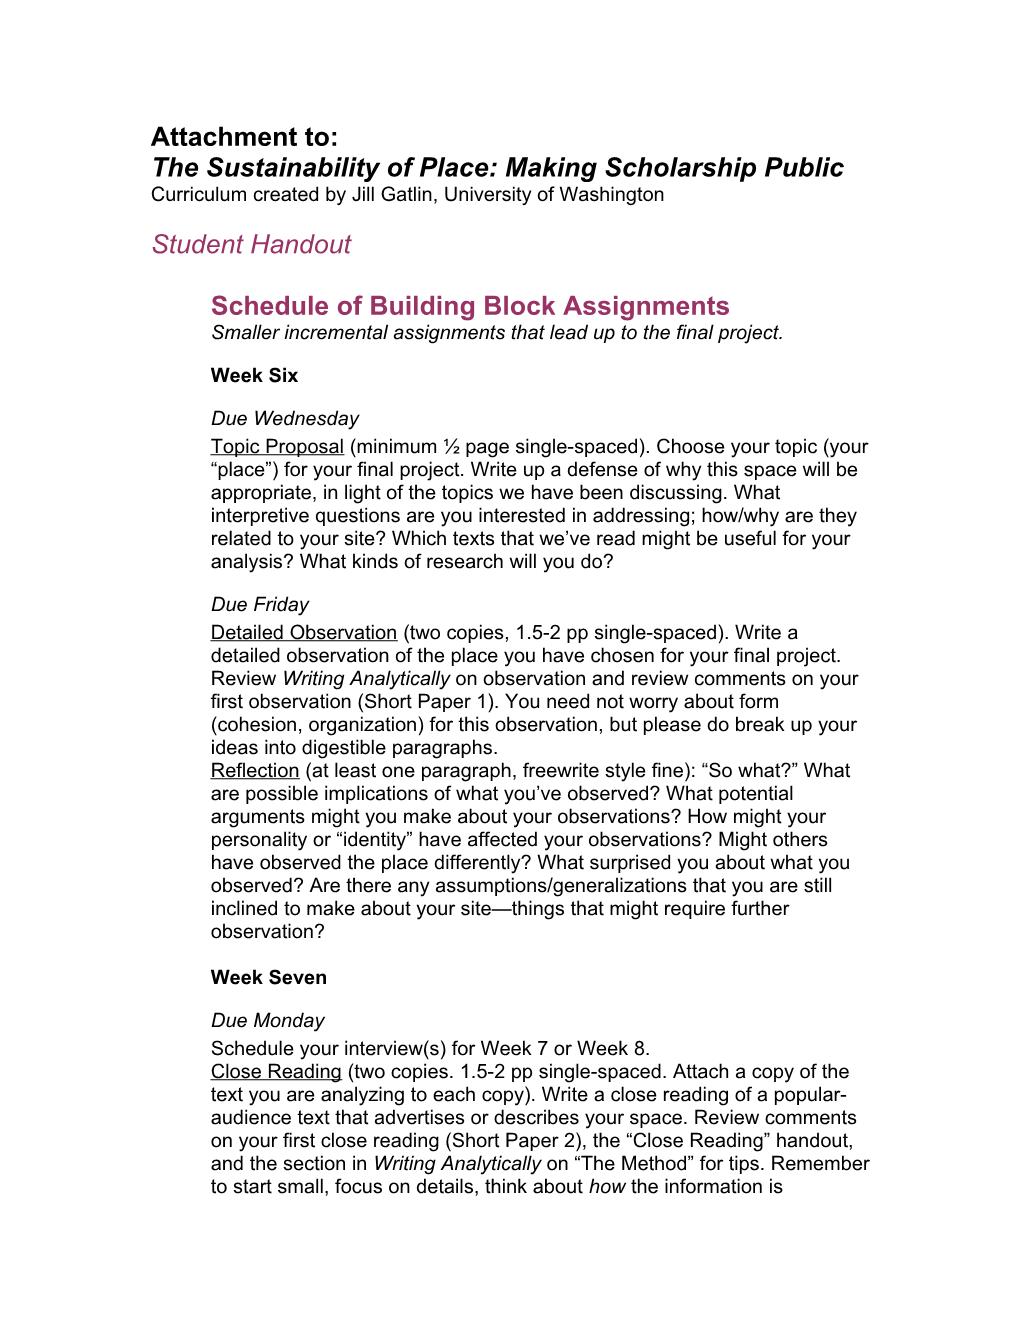 The Sustainability of Place: Making Scholarship Public